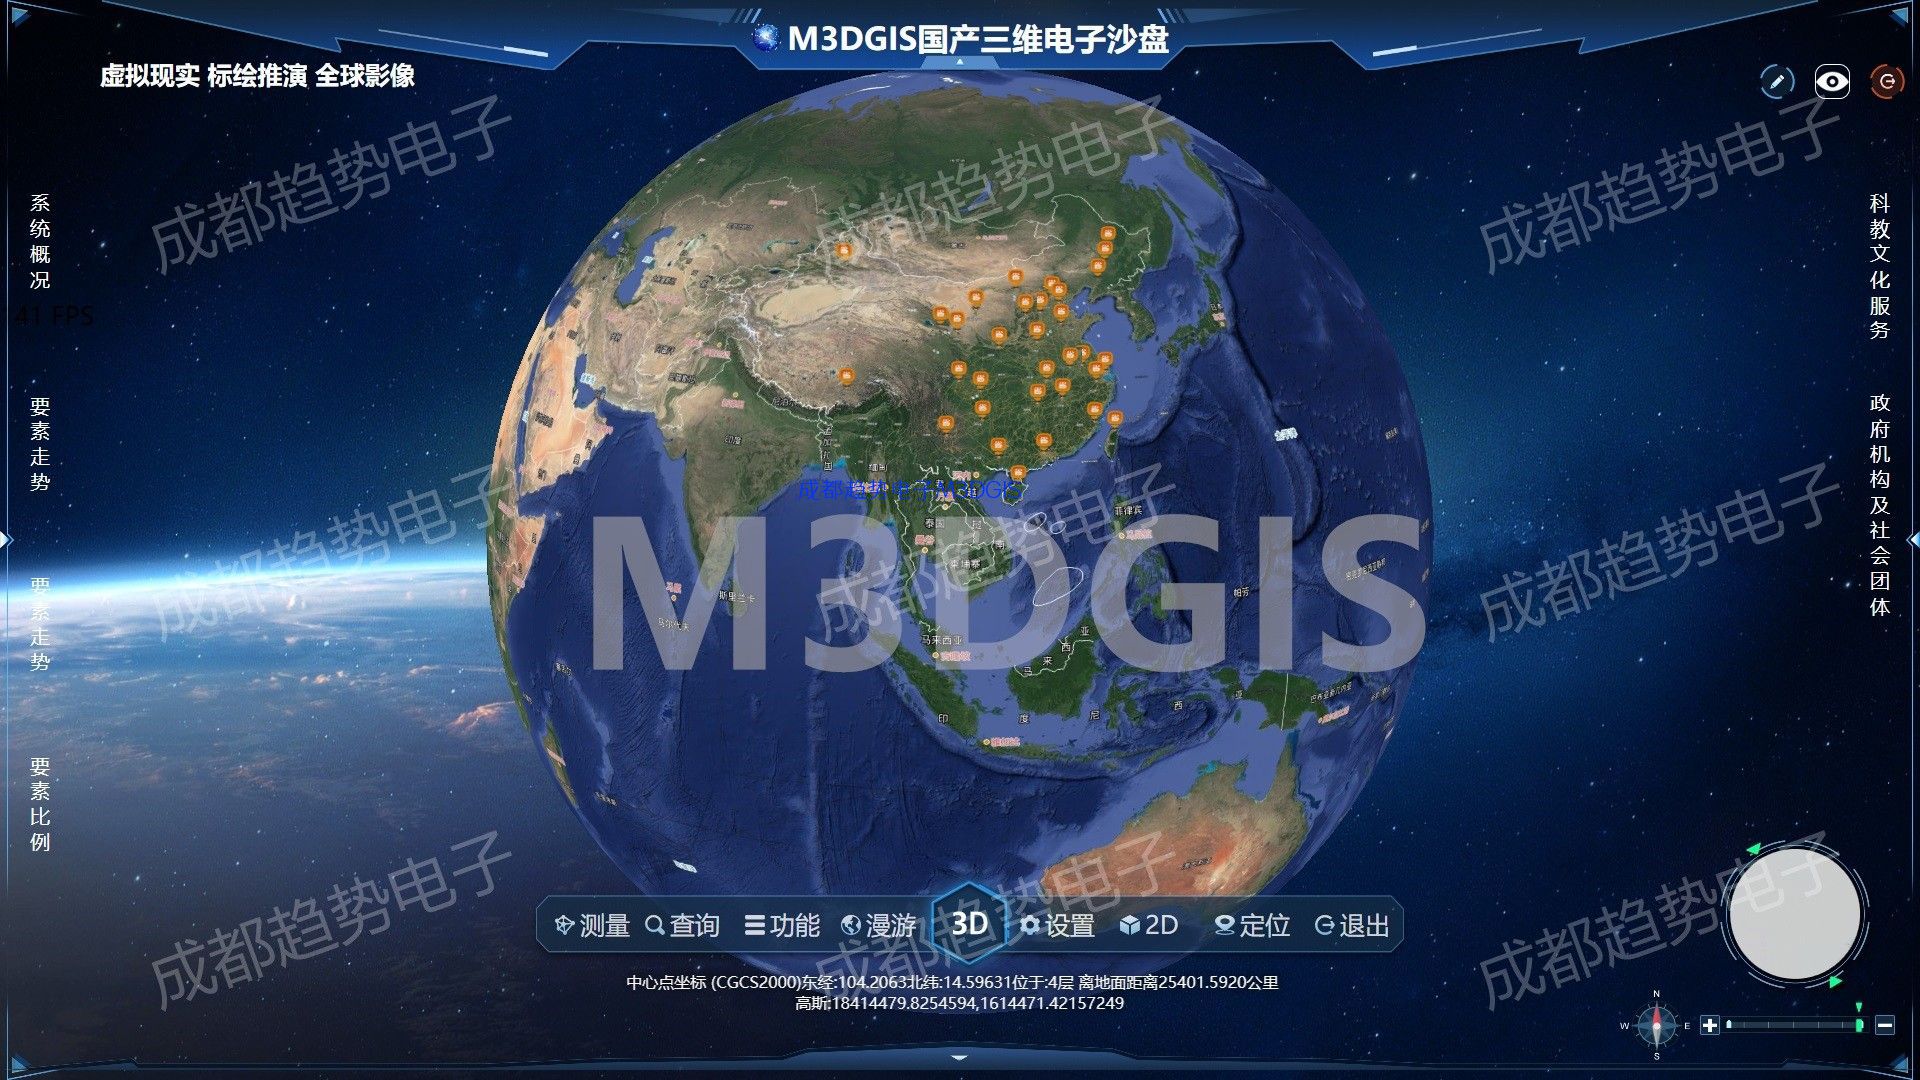 M3DGIS沙盘核心功能